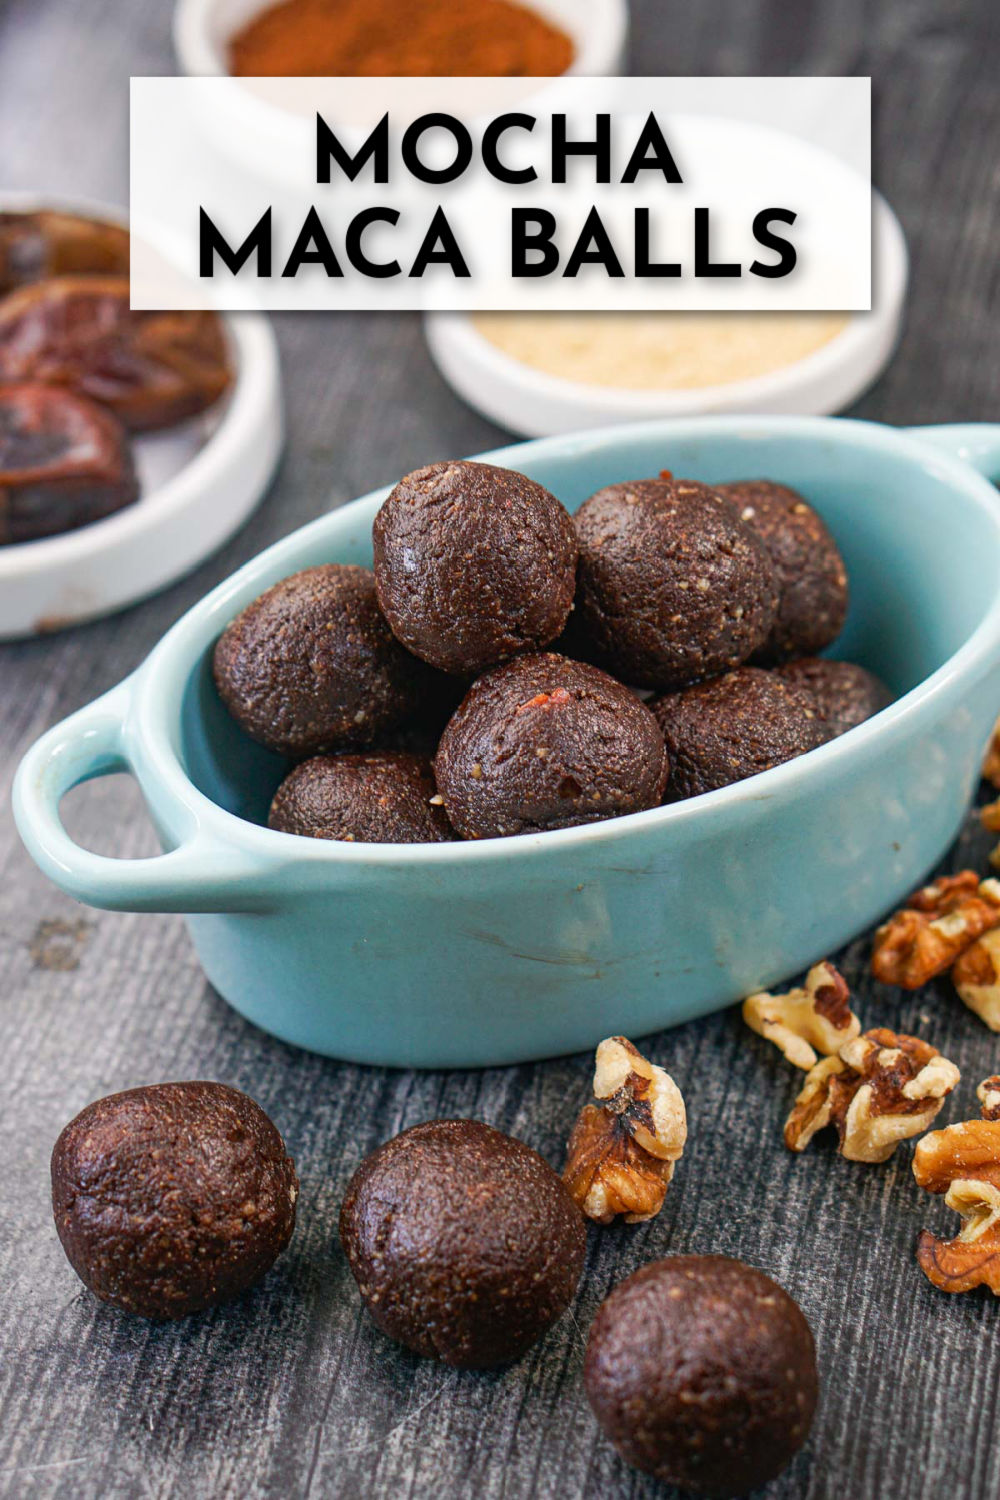 blue dish with mocha maca balls, dates, cocoa powder, walnuts and maca powder with text